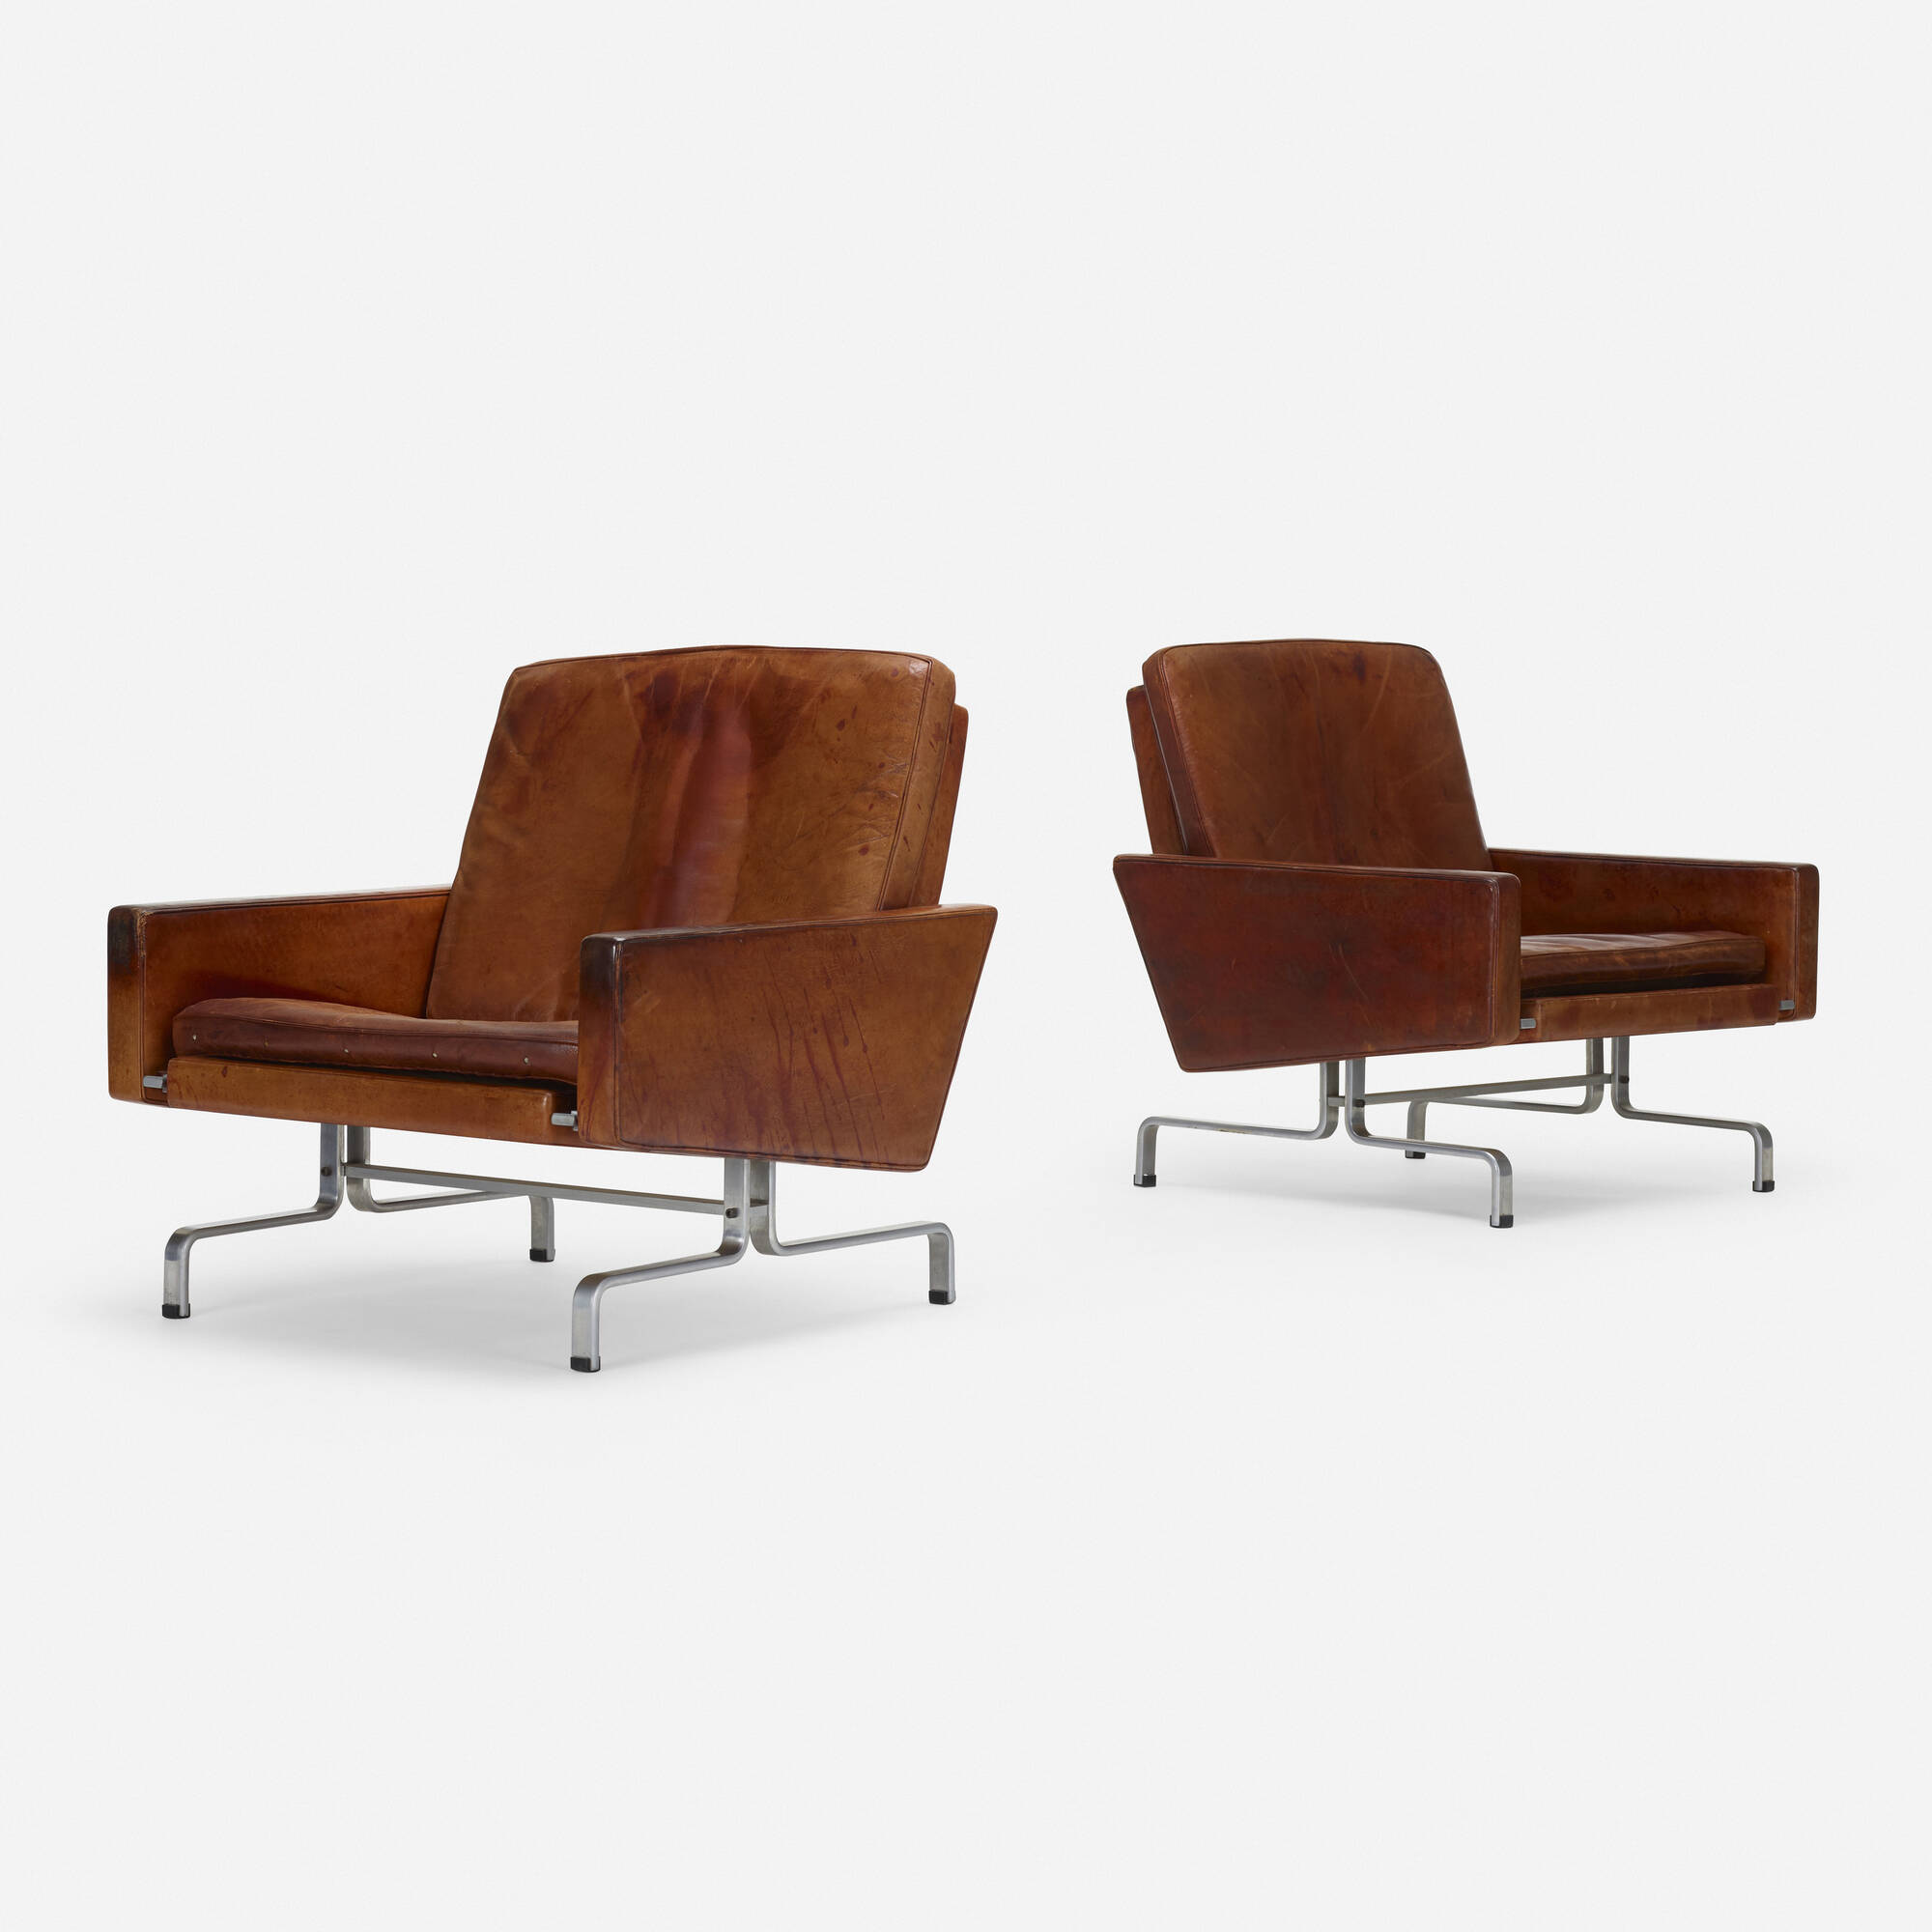 244: POUL KJAERHOLM, PK 31/1 lounge chairs, pair < Important 